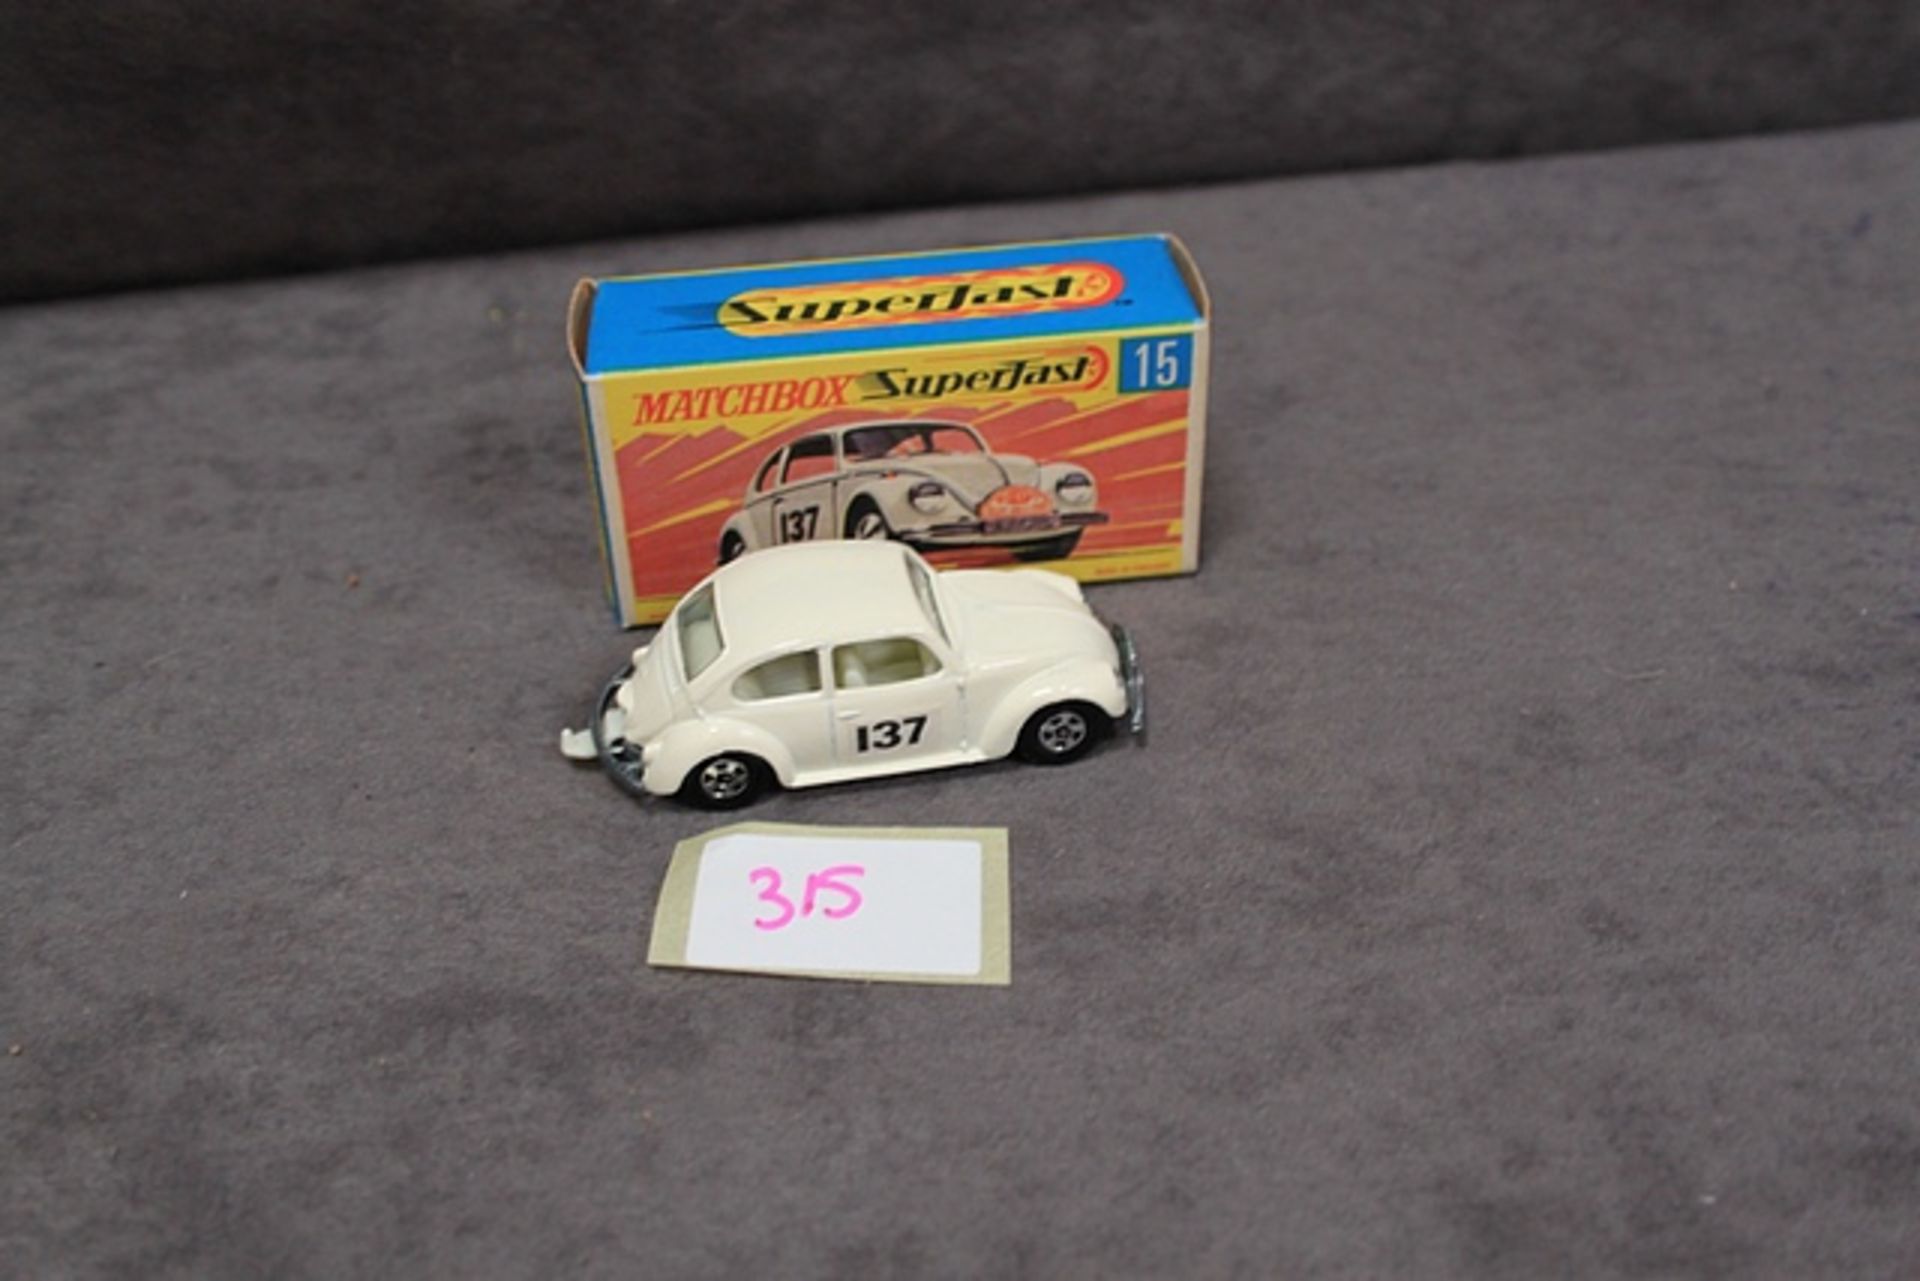 Mint Matchbox Superfast diecast #15 Volkswagen in white (Monte Carlo rally Version) with in crisp